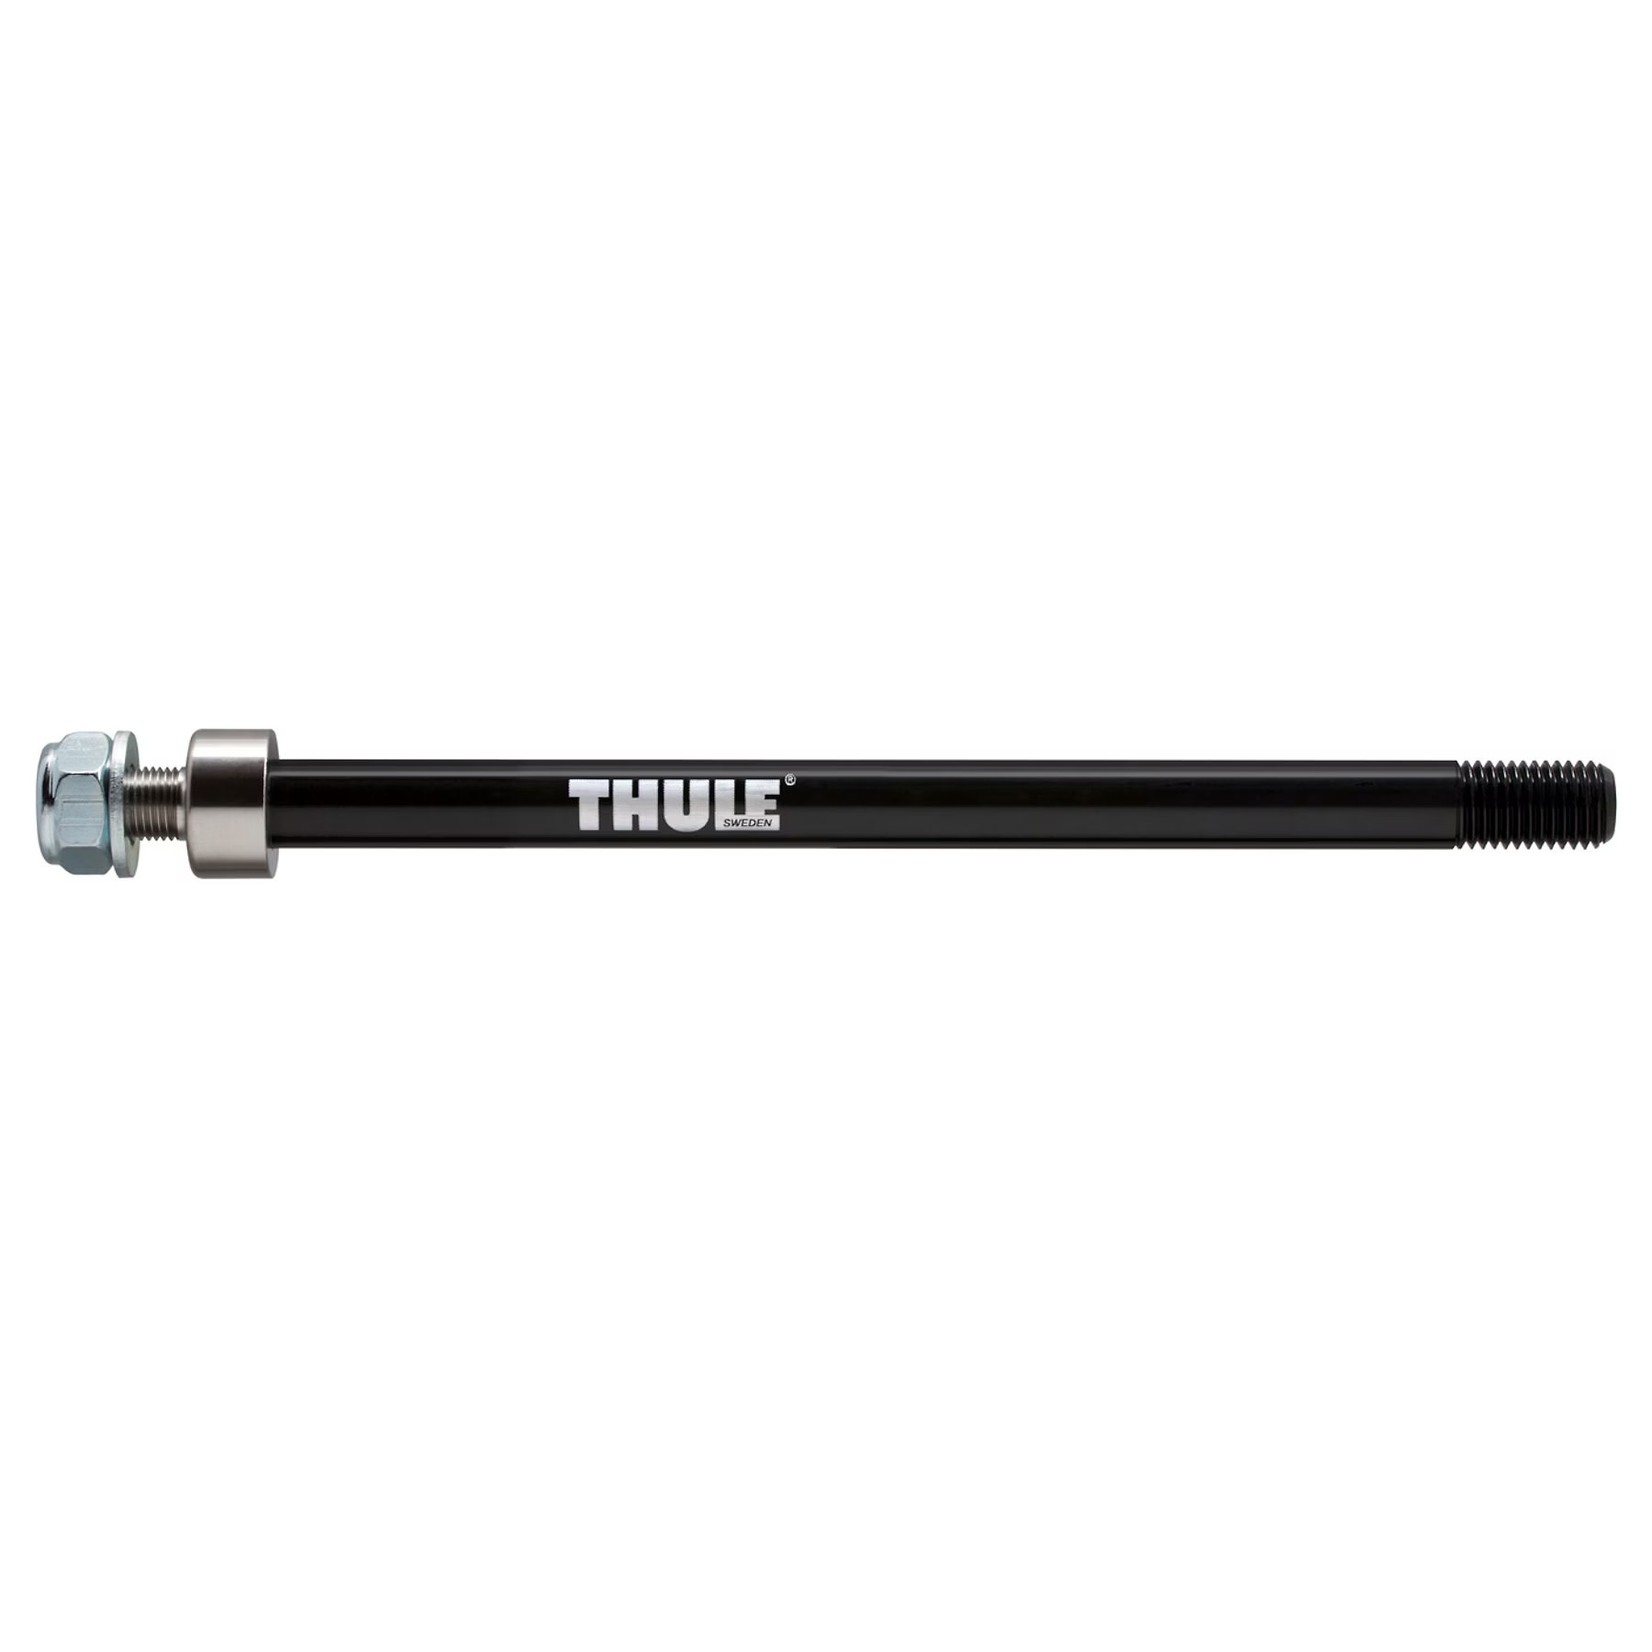 Thule Thule Thru Axle Maxle (M12 x 1.75) Adapter 217 or 229mm 20110739 - Black